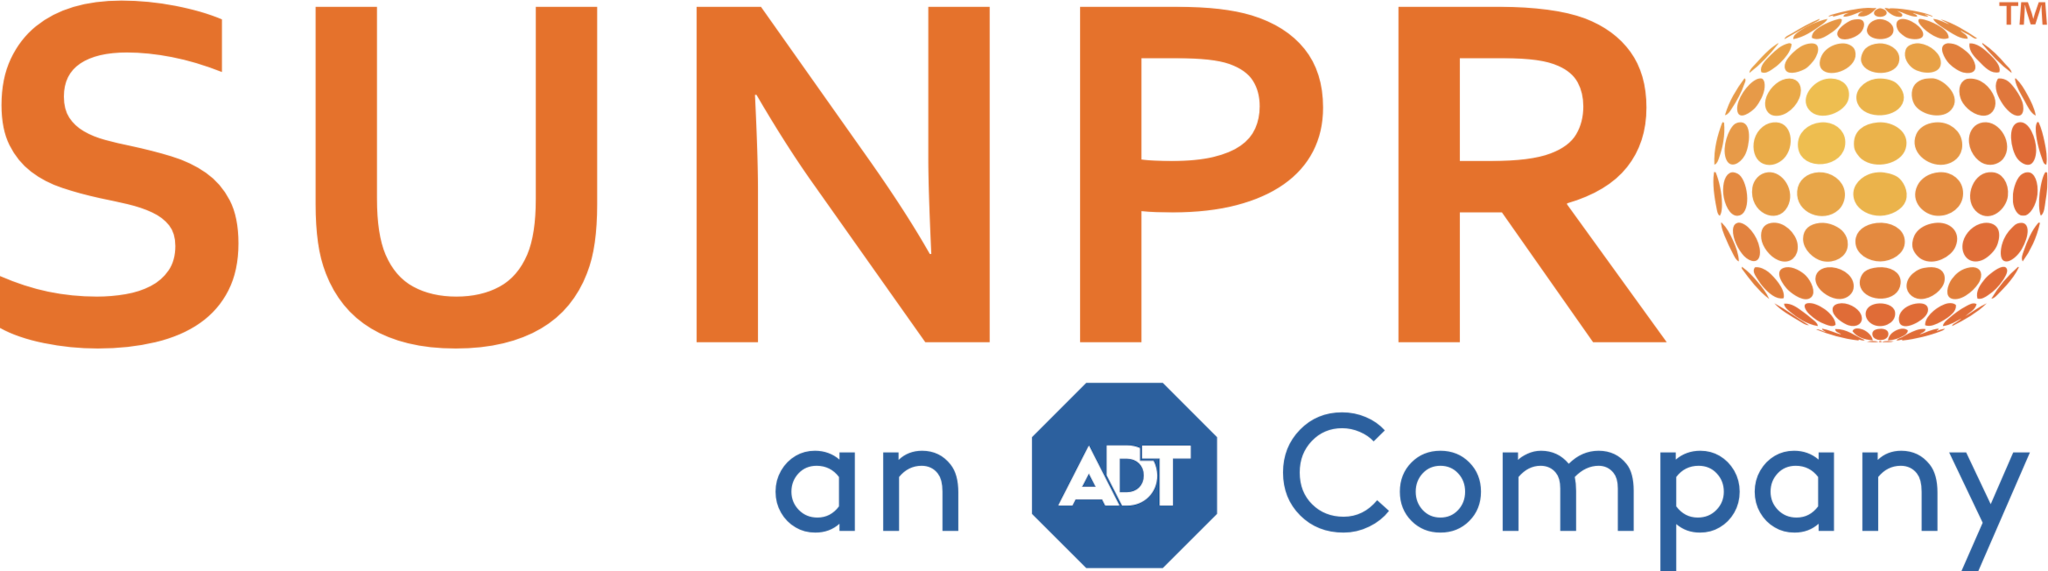 ADT | Sunpro partnership